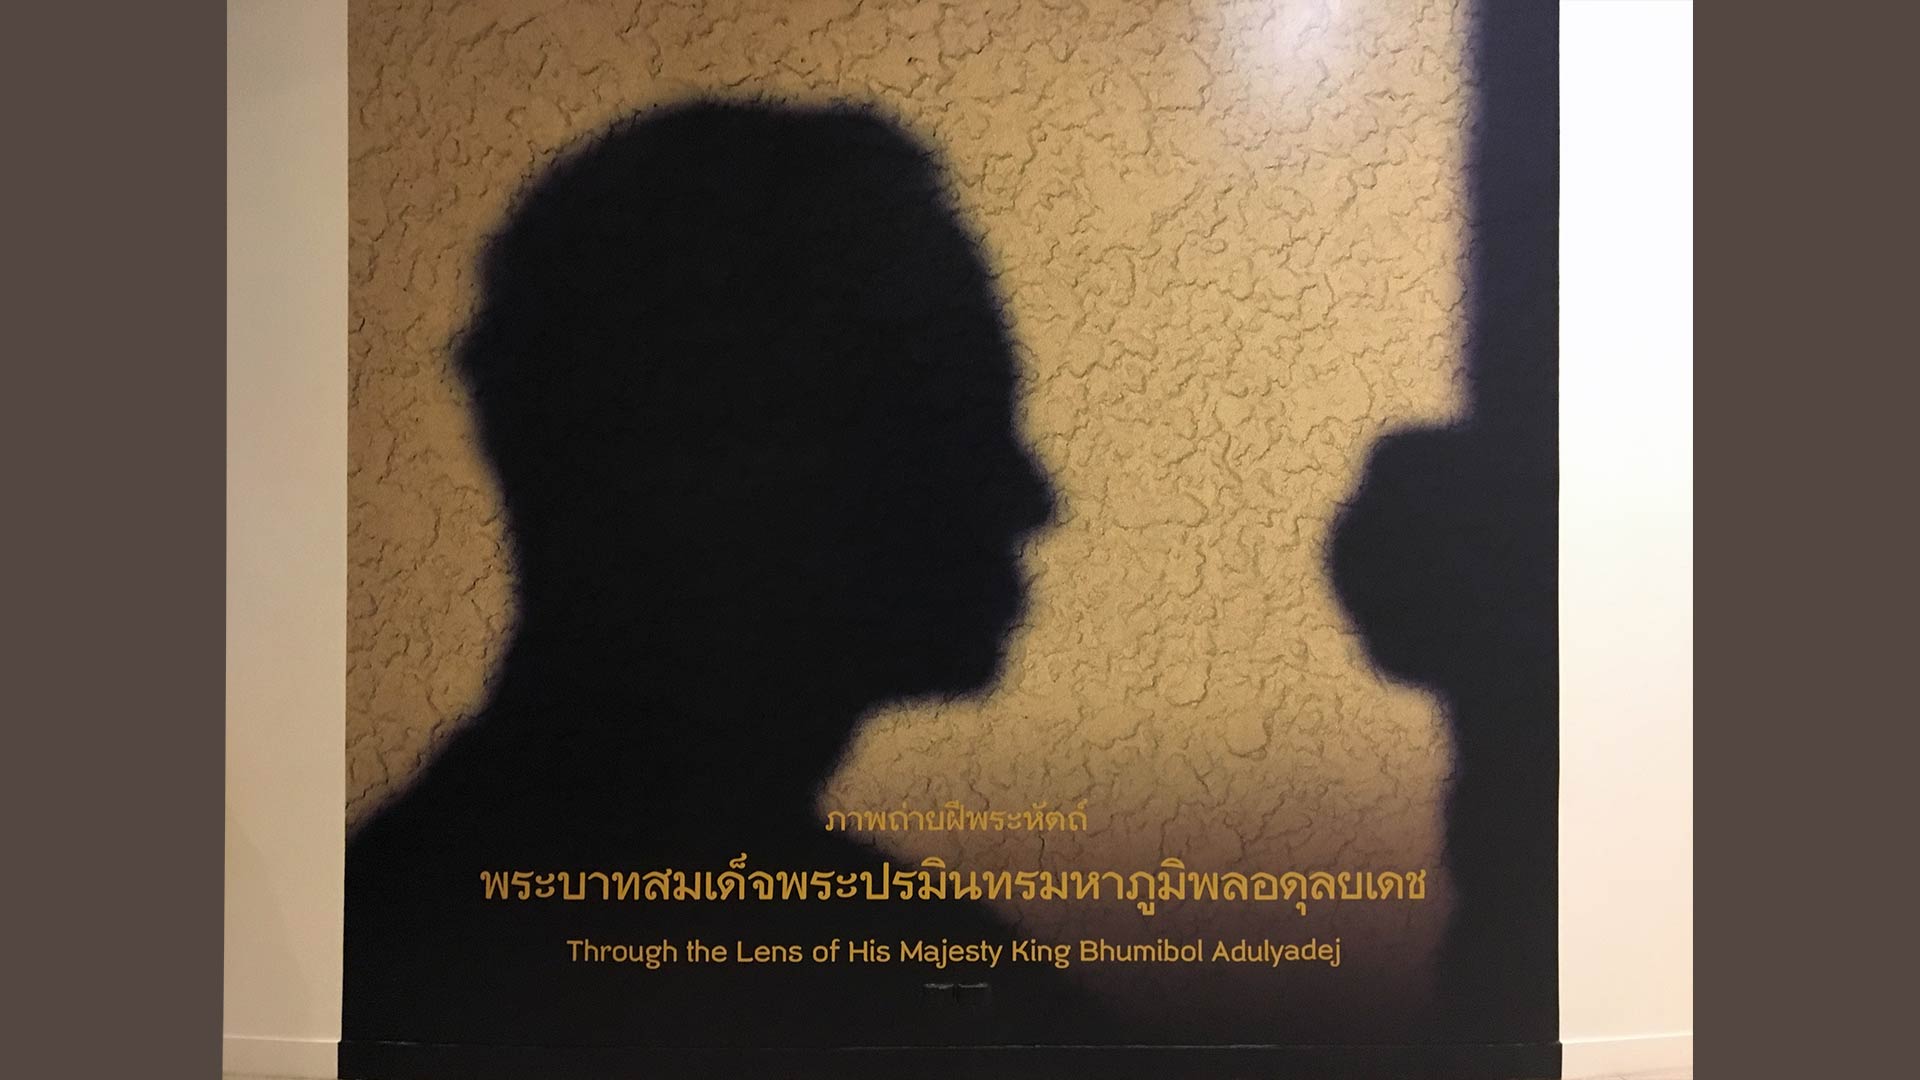 Exhibition Through The Lens of His Majesty King Bhumibol Adulyadej | นิทรรศการภาพถ่ายฝีพระหัตถ์พระบาทสมเด็จพระปรมินทรมหาภูมิพลอดุลยเดช